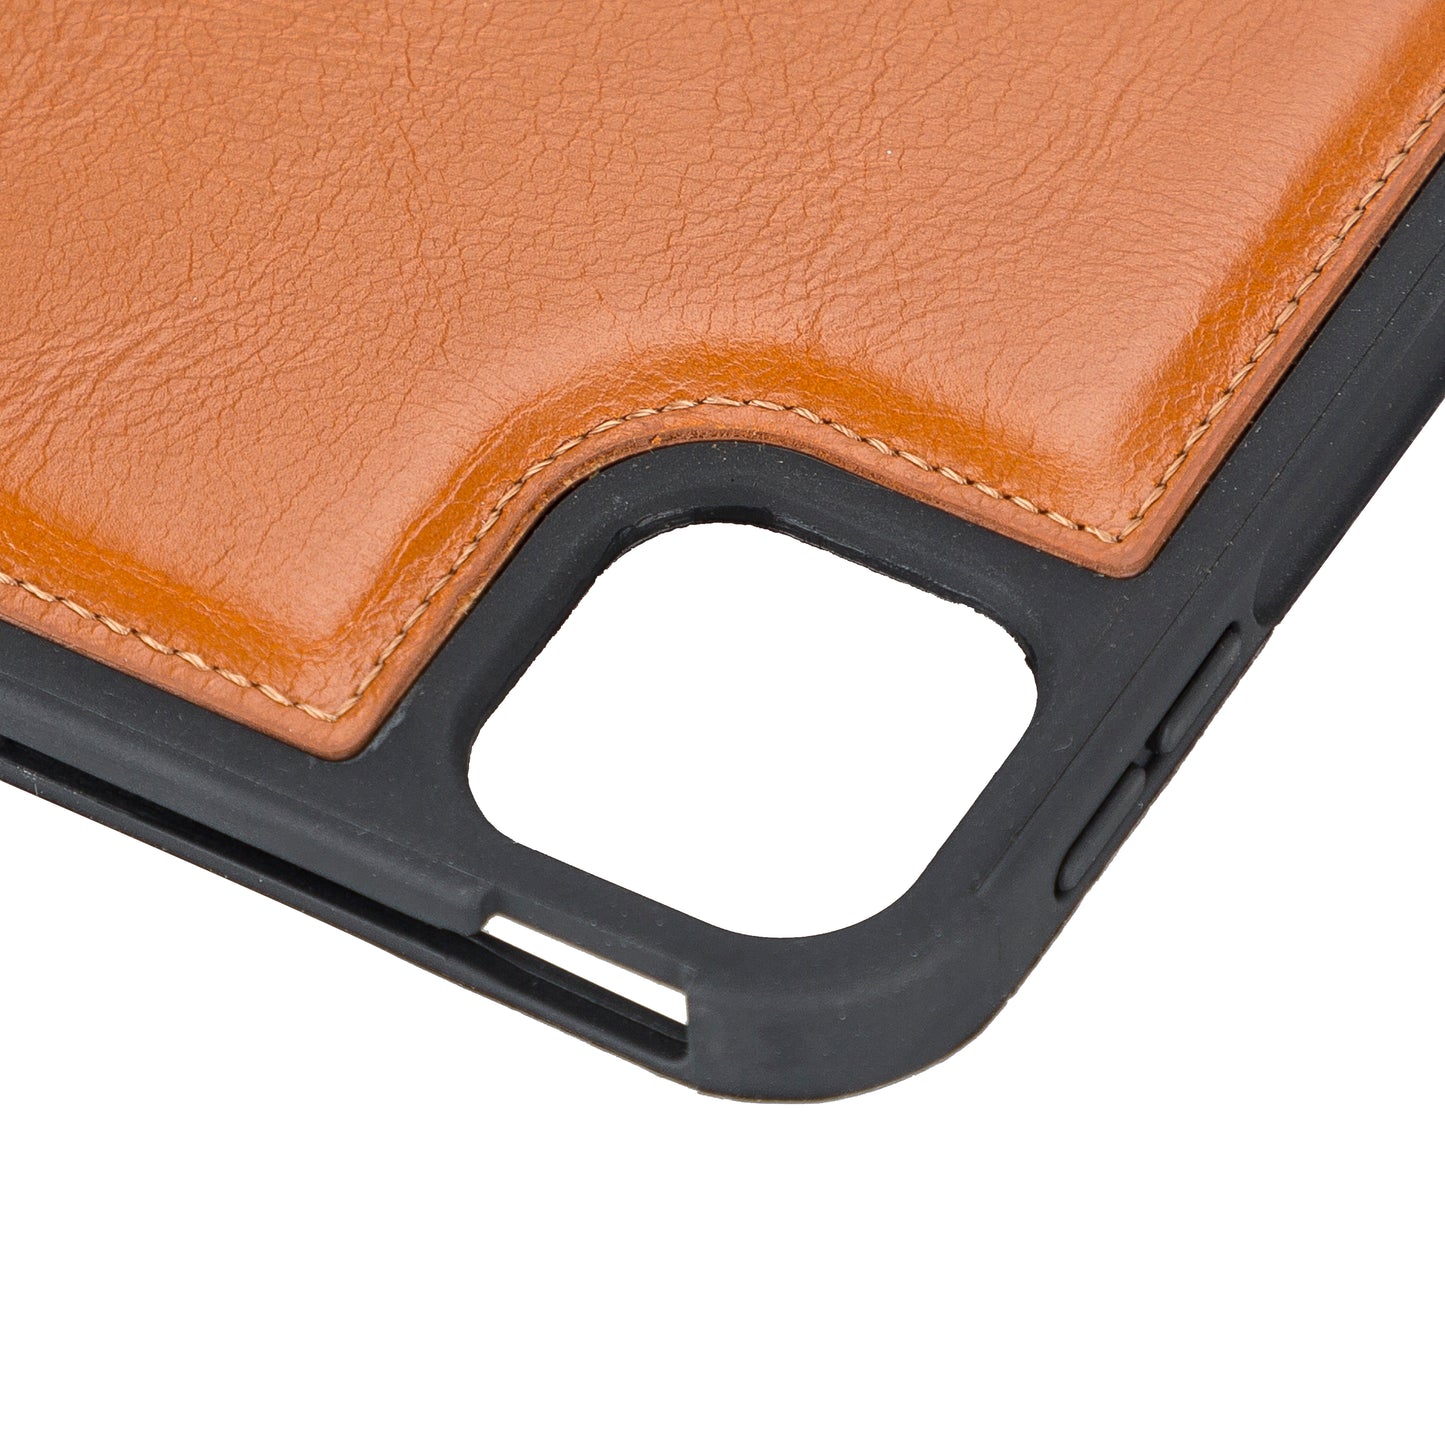 Apple iPad Pro (11") Leather Case - Light Brown